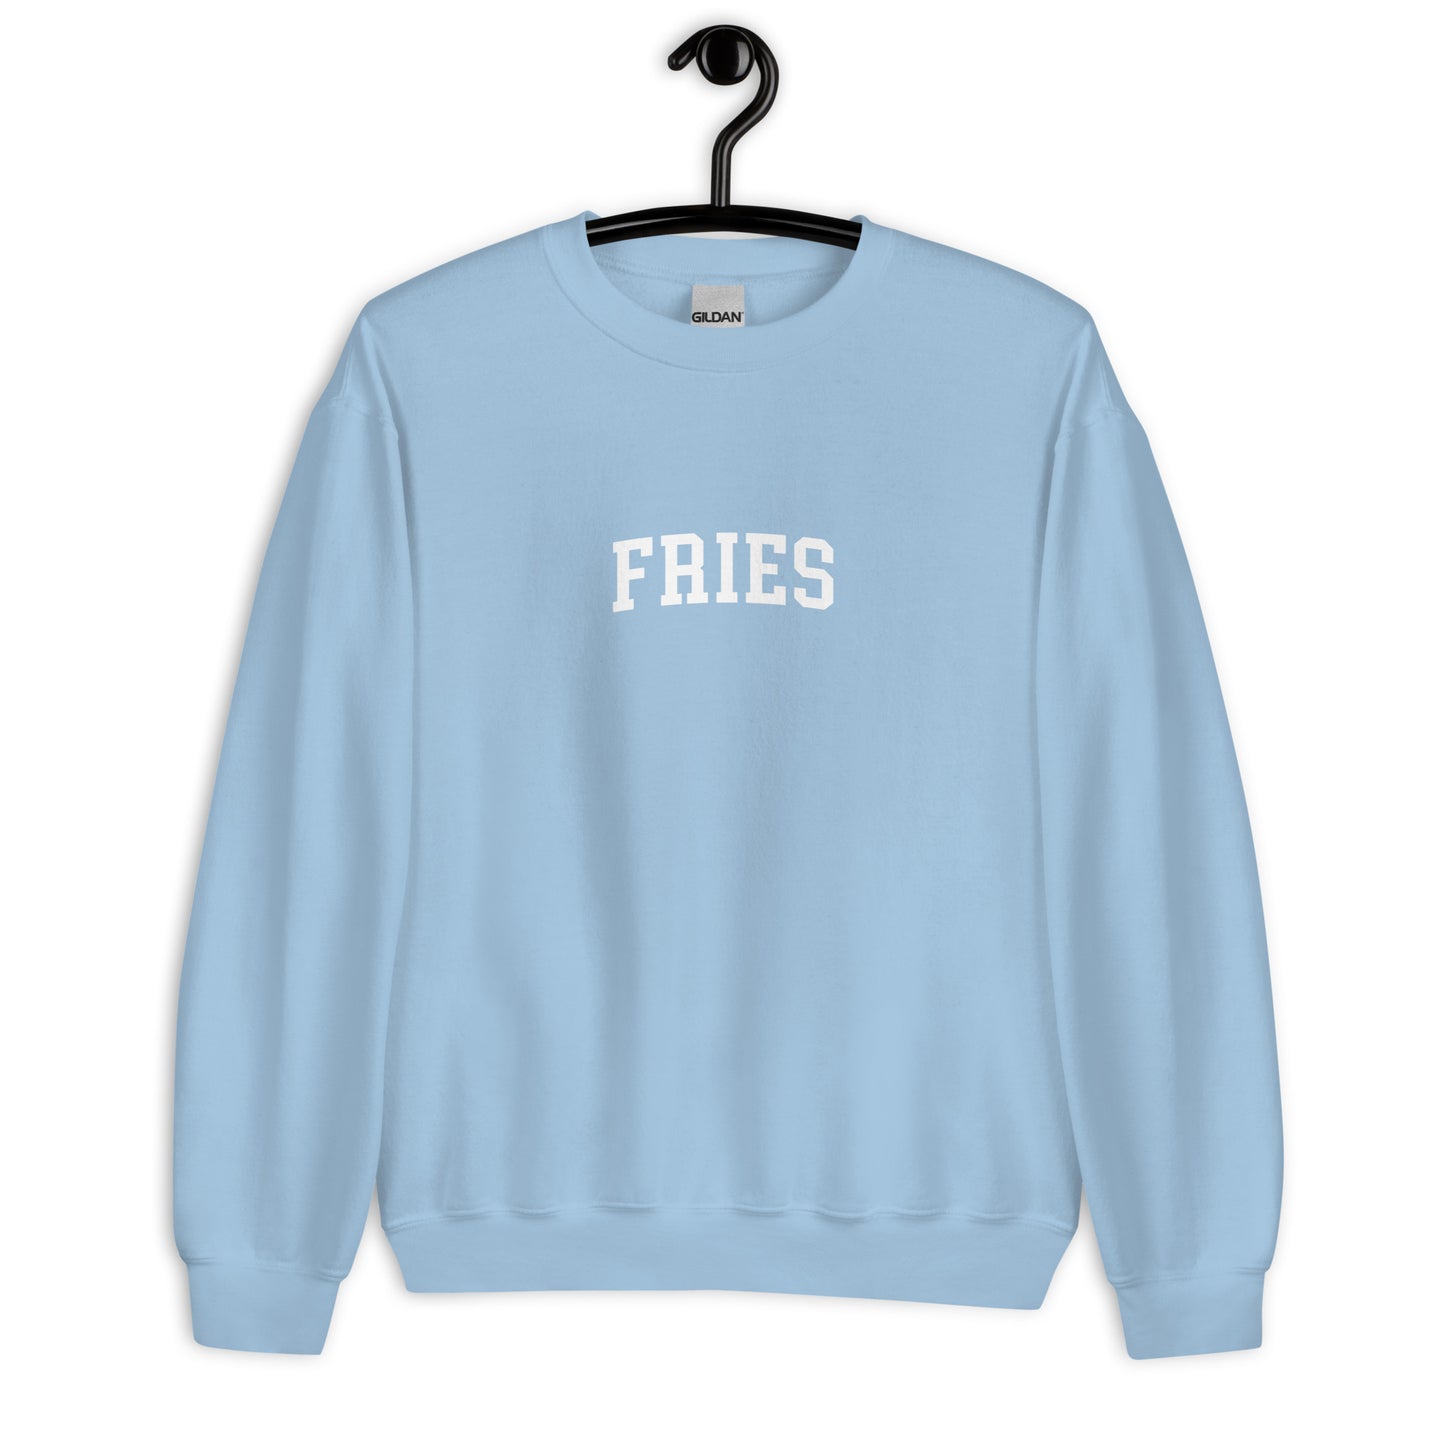 Fries Sweatshirt - Arched Font